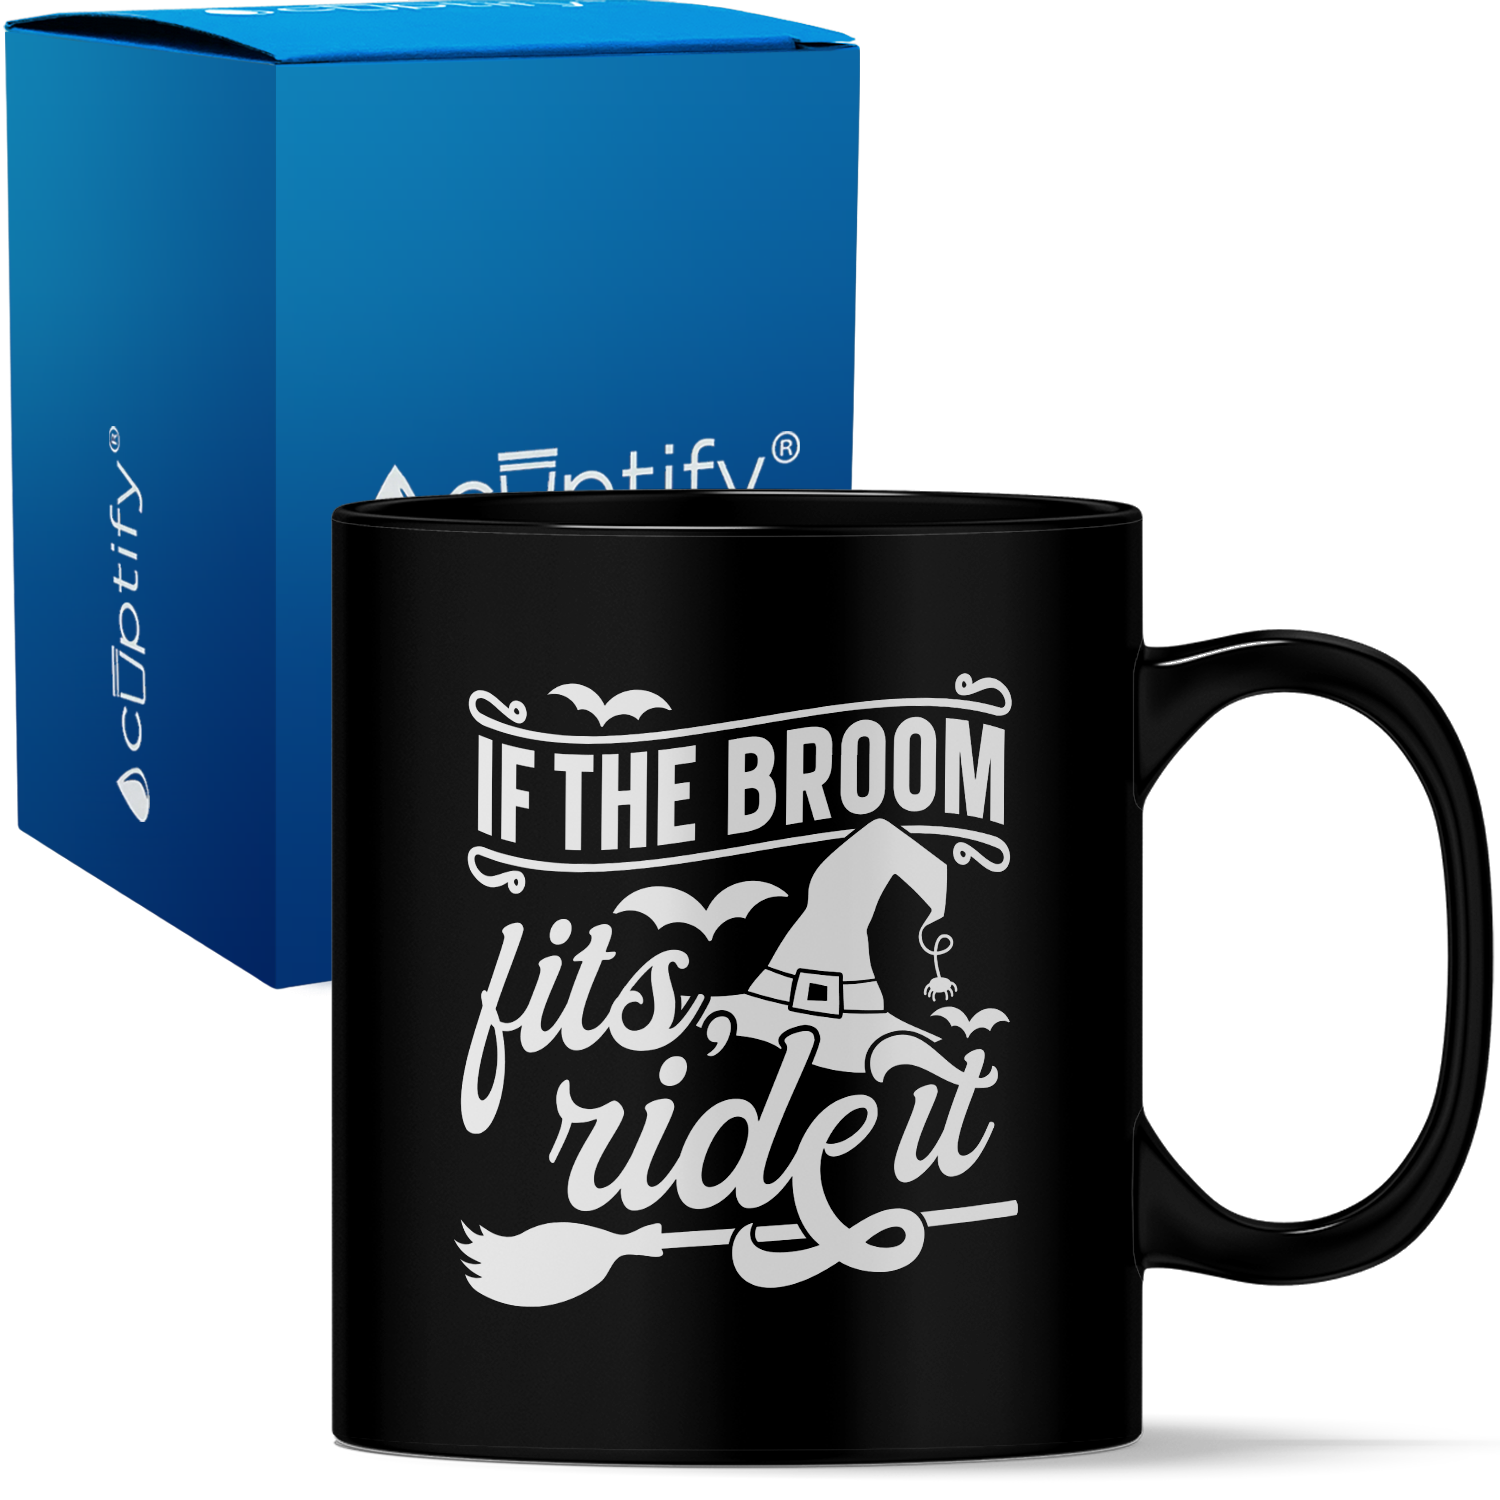 If the Broom Fits Ride it on Black 11oz Halloween Coffee Mug